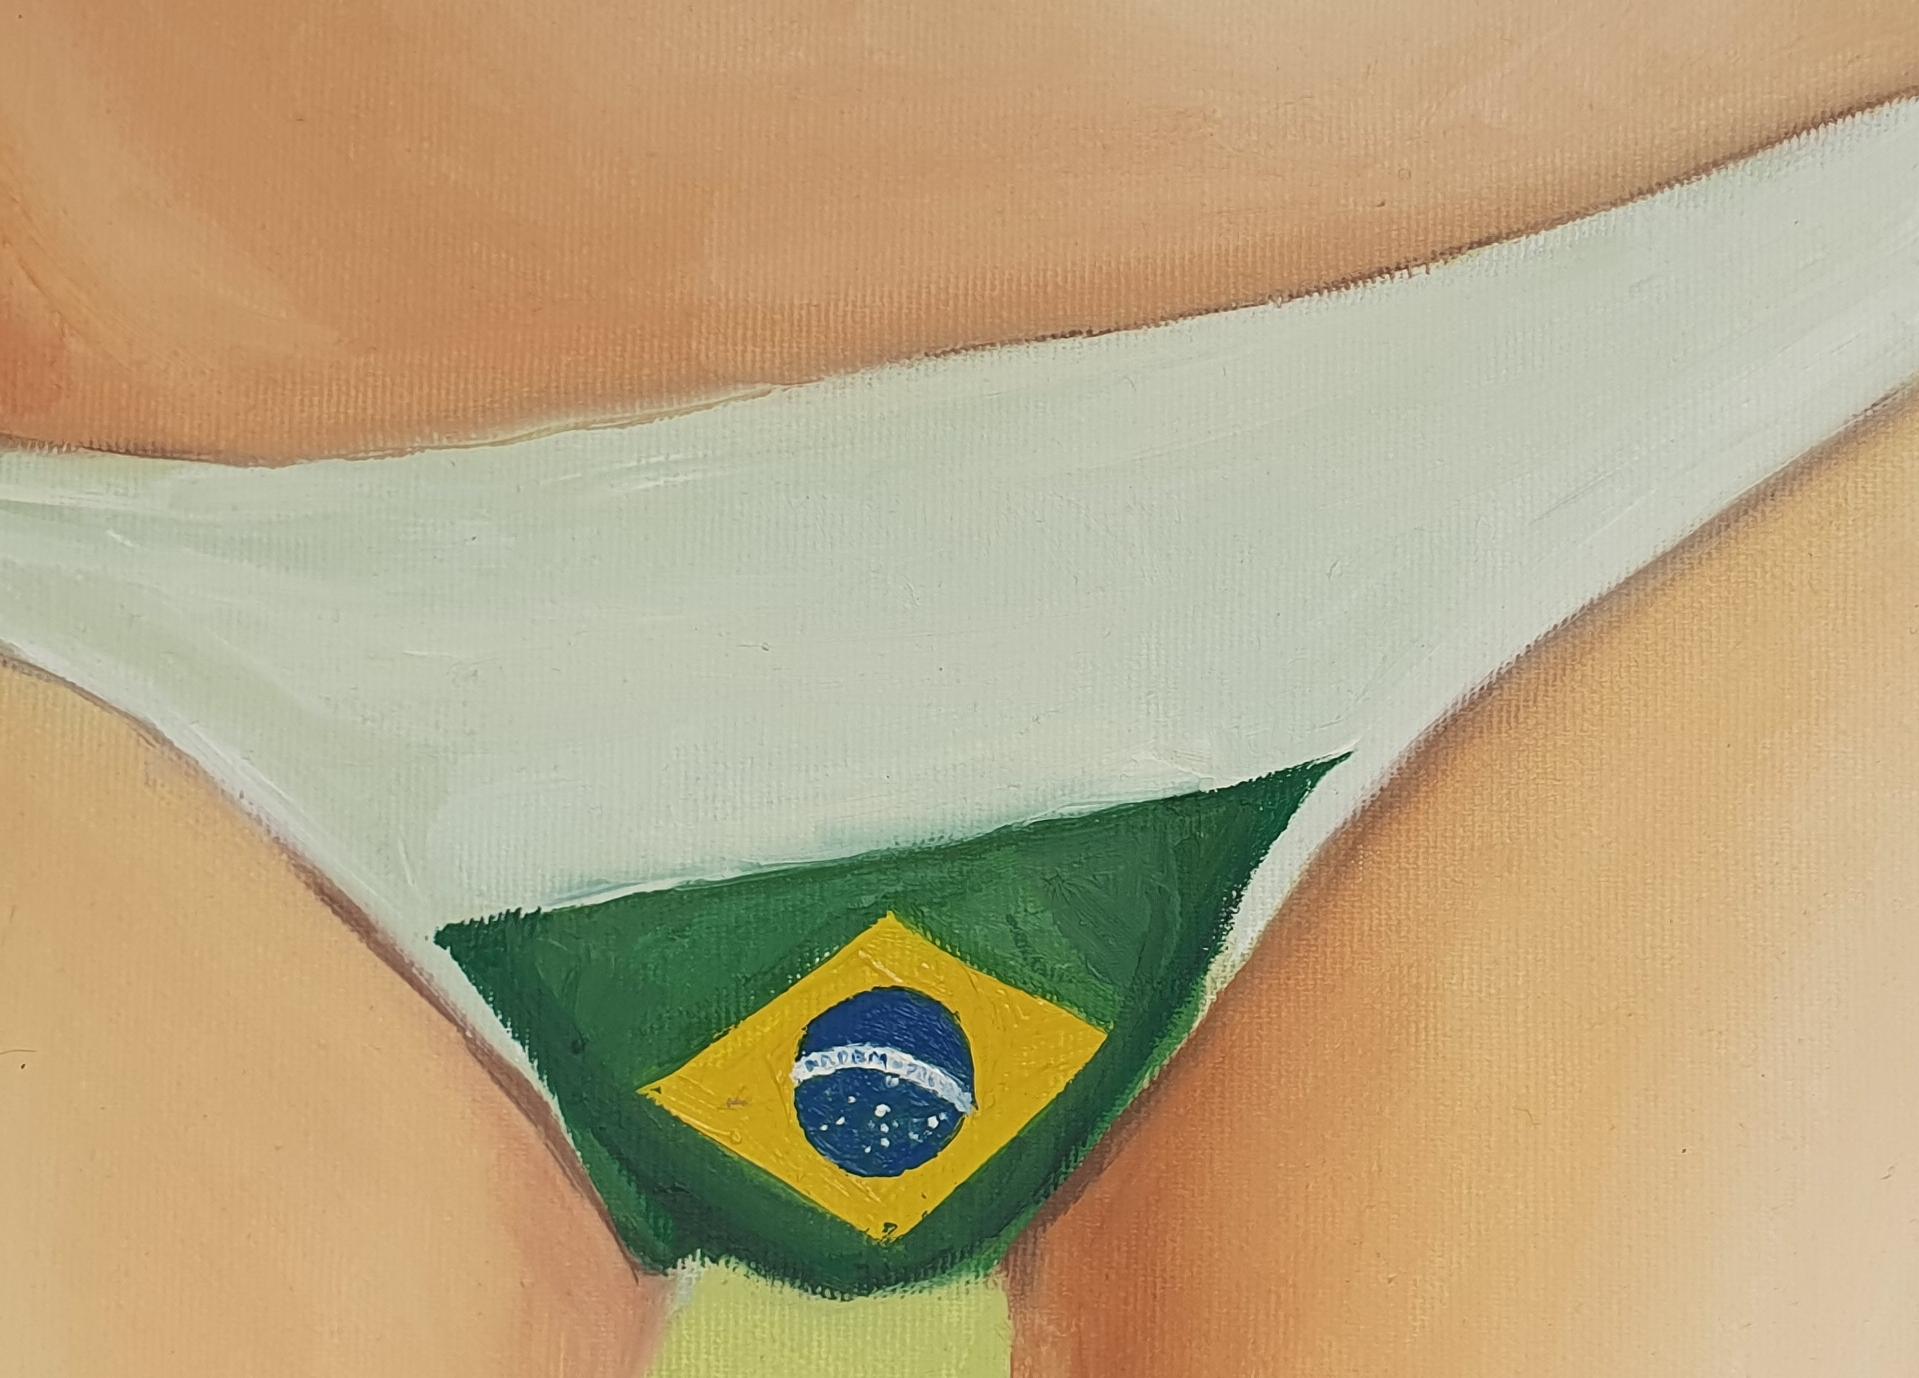 Brasilianisch - 21. Jahrhundert, Figuratives Gemälde, Grün, Flagge, Bikini-Oberteil (Beige), Figurative Painting, von Mihai Florea